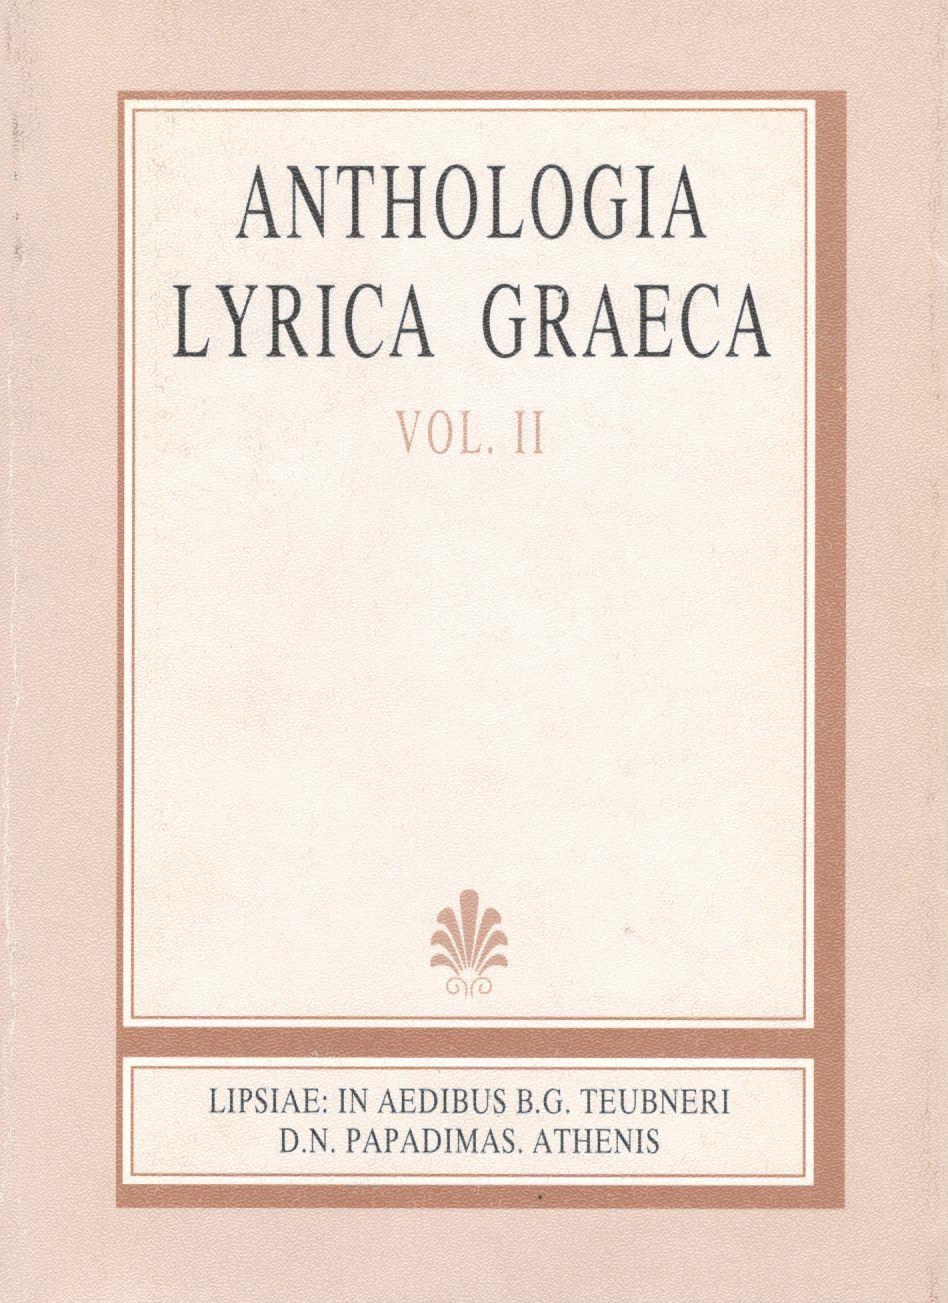 Anthologia Lyrica Graeca, Vol. II [Ελληνική Λυρική Ανθολογία, τ. Β